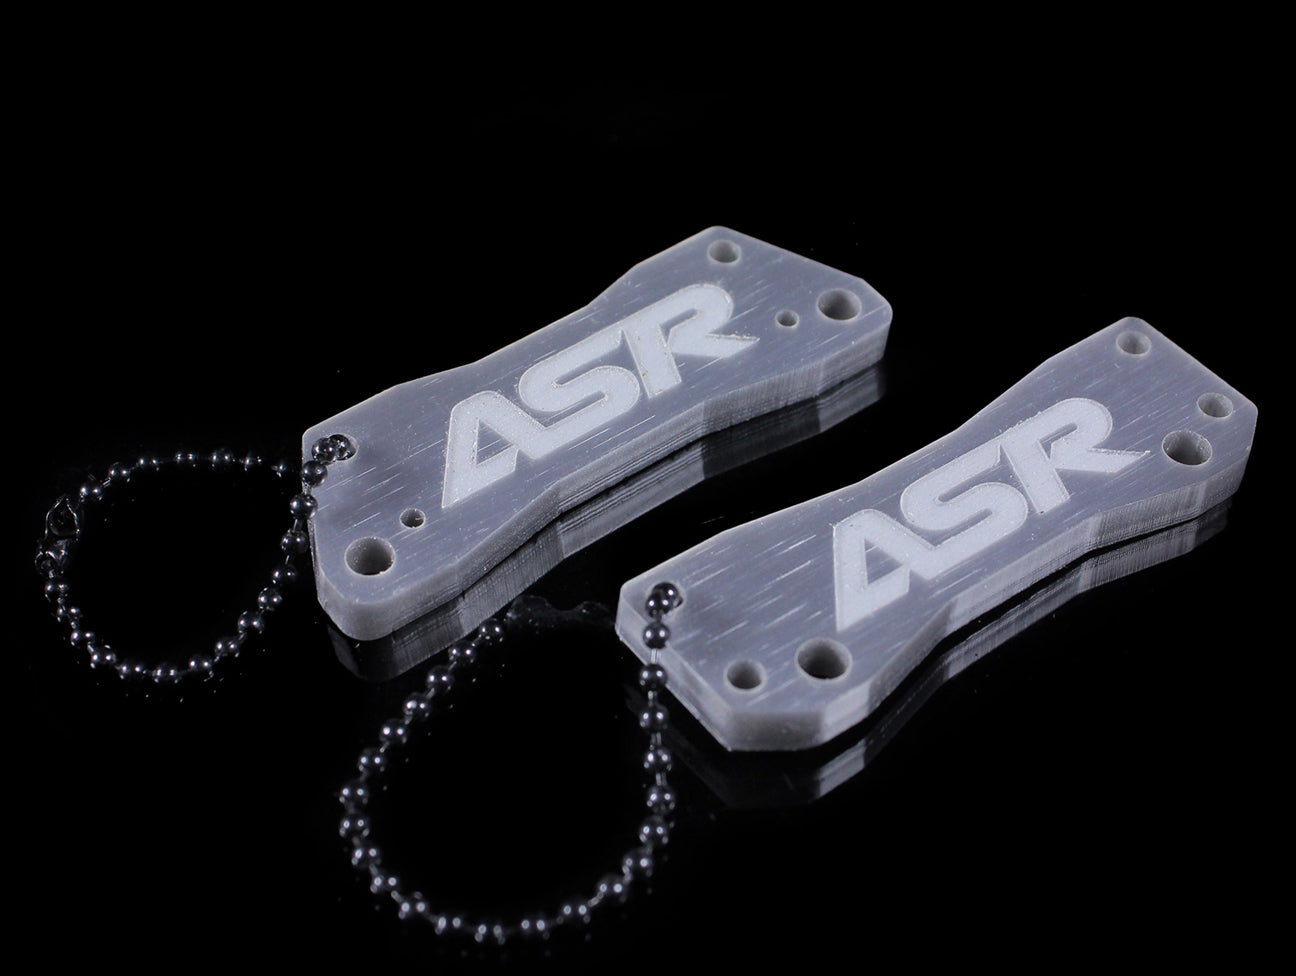 ASR Subframe Brace Keychain